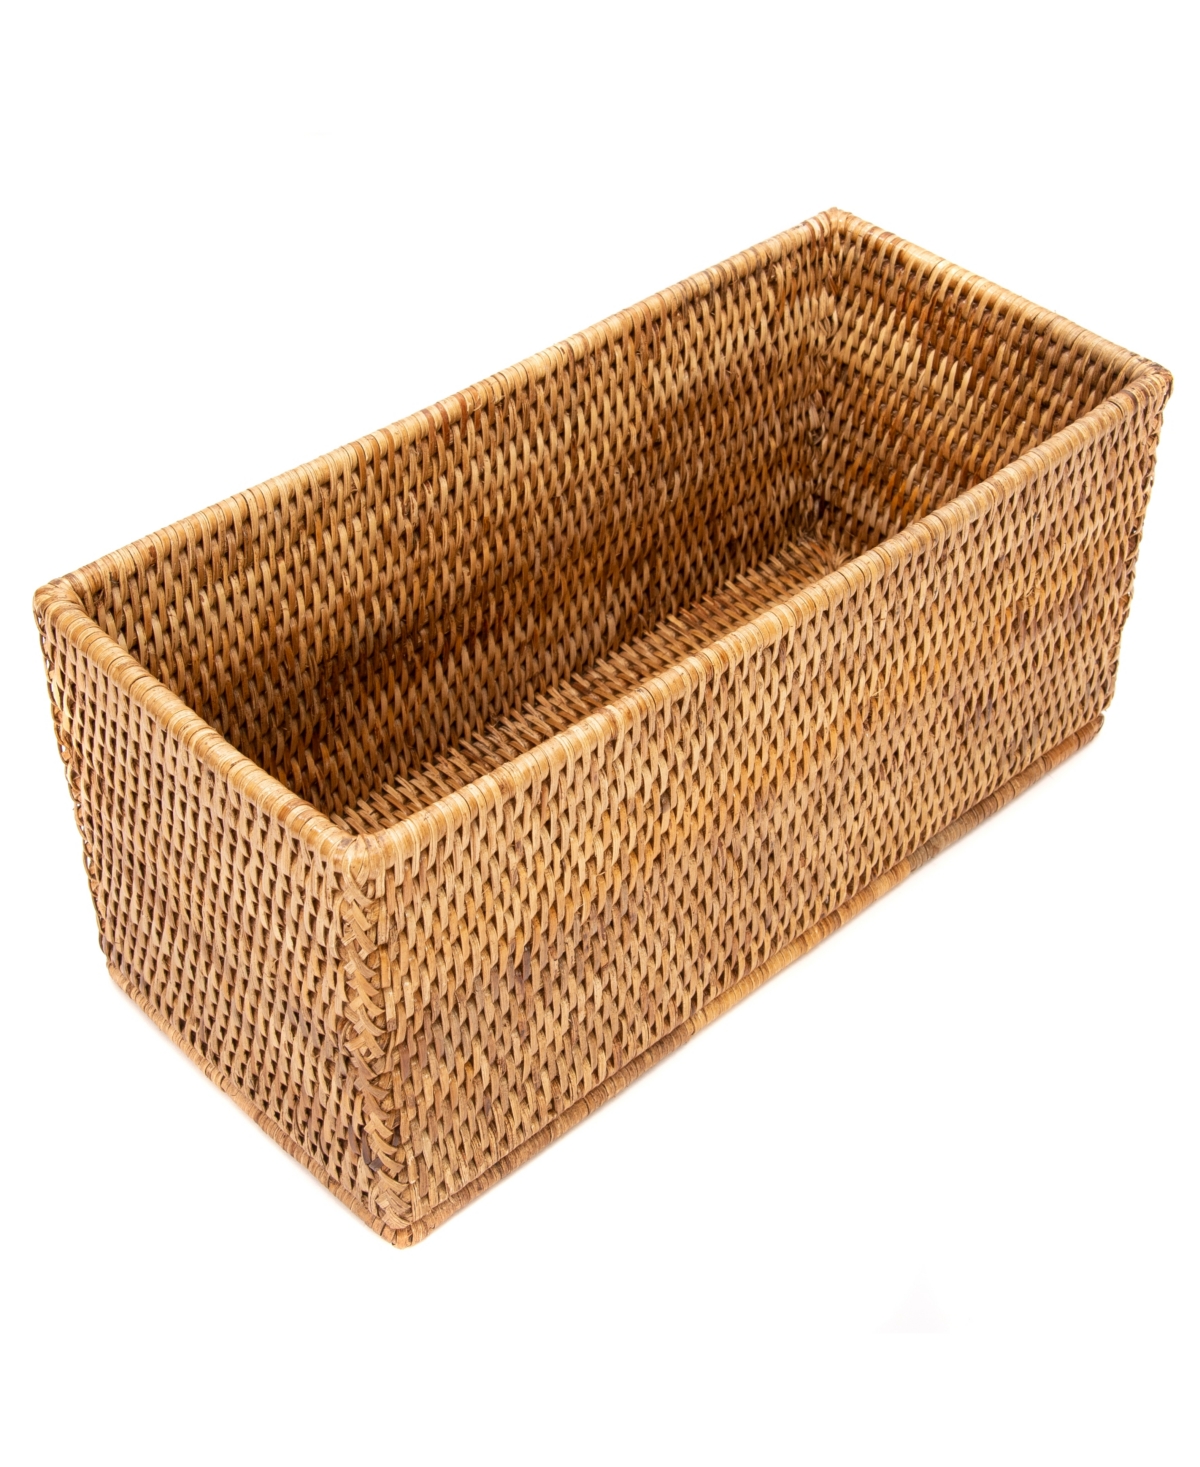 Artifacts Trading Company Artifacts Rattan Rectangular Basket In Honey Brown